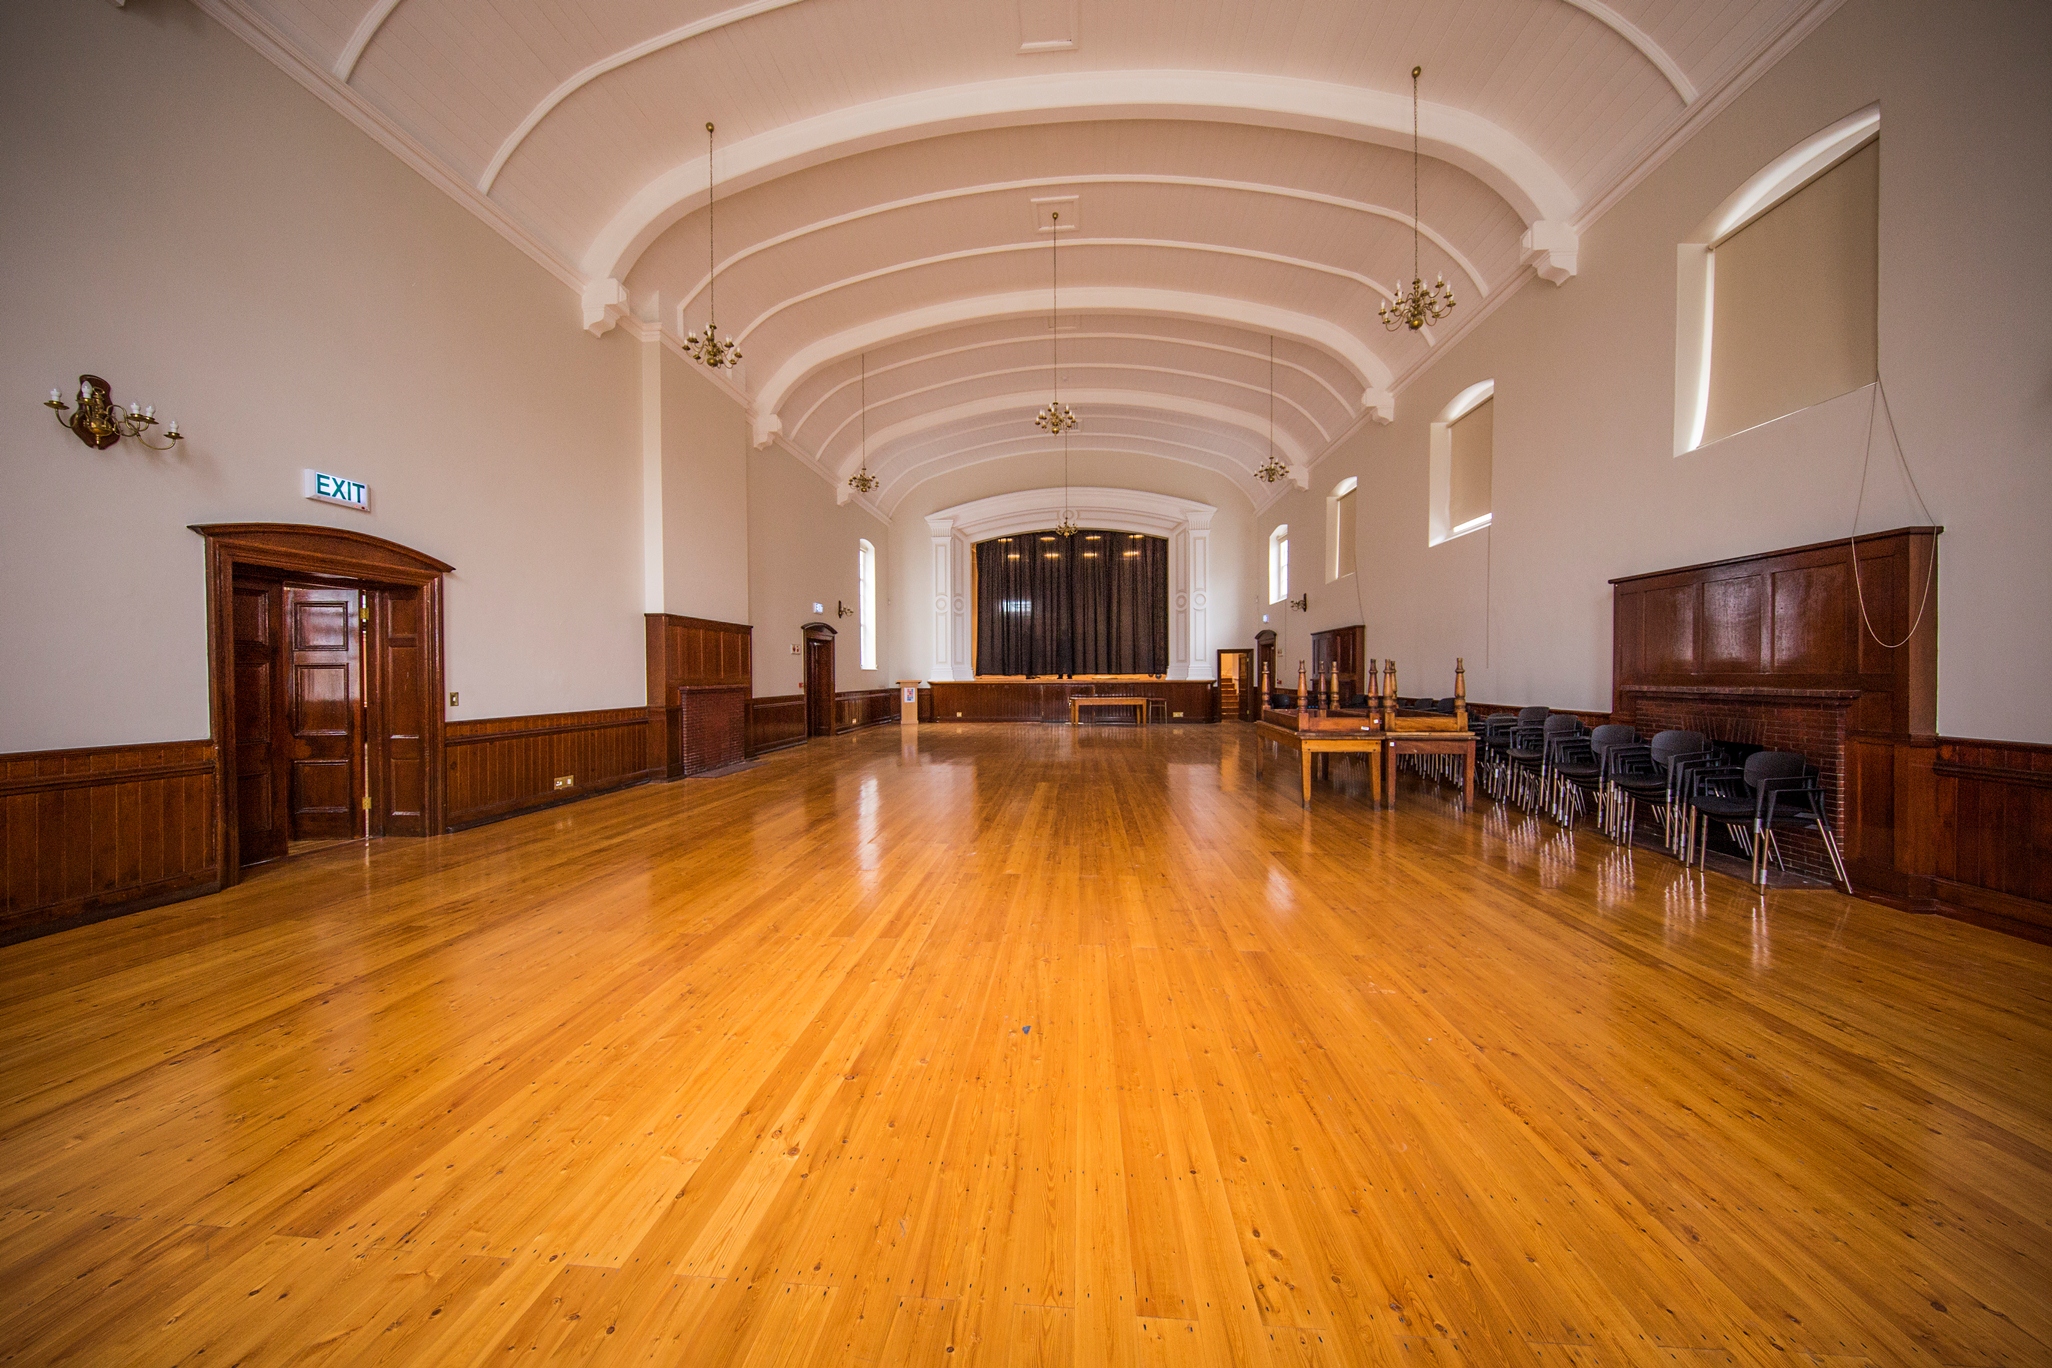 The refurbishment of the hall